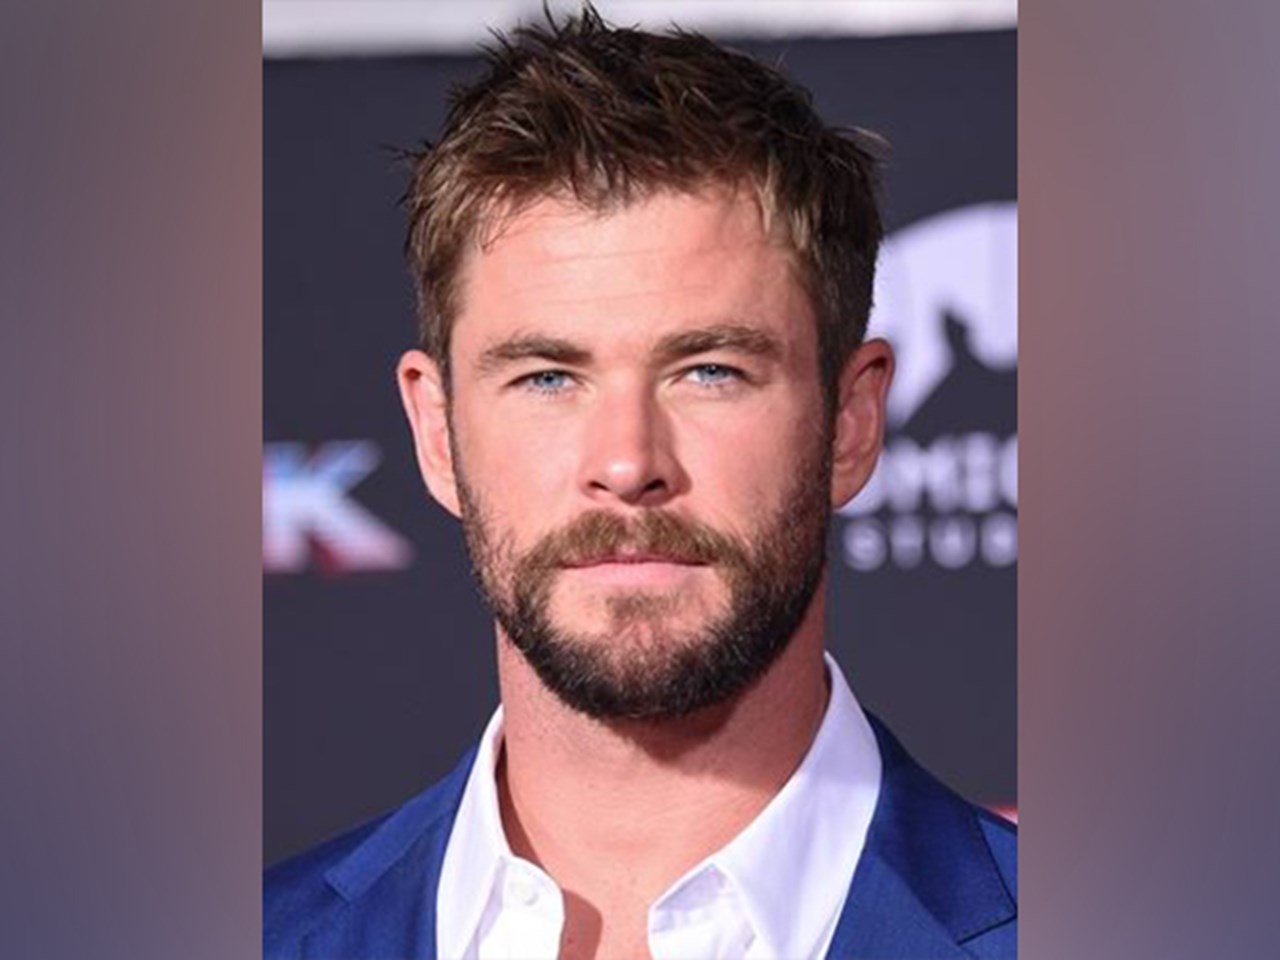 Does Chris Hemsworth, Man Among Lesser Men, Moisturize His Face